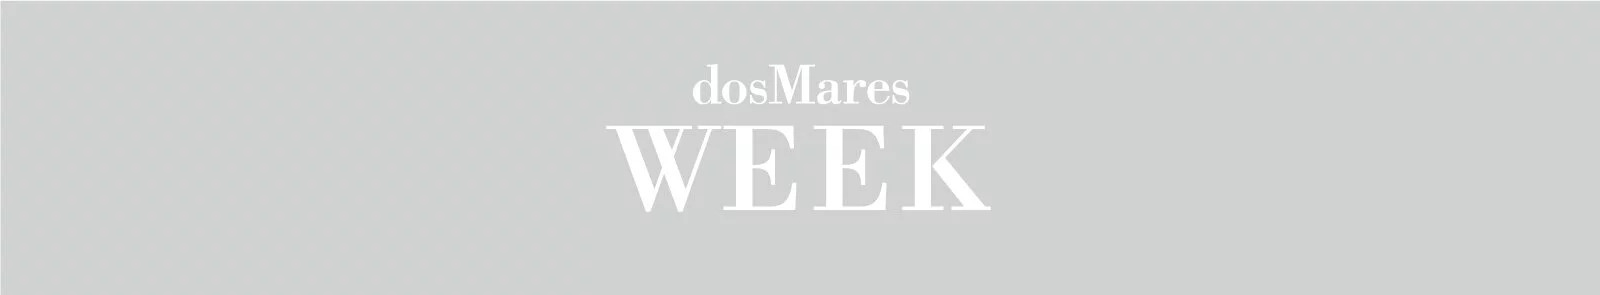 DosMares Week